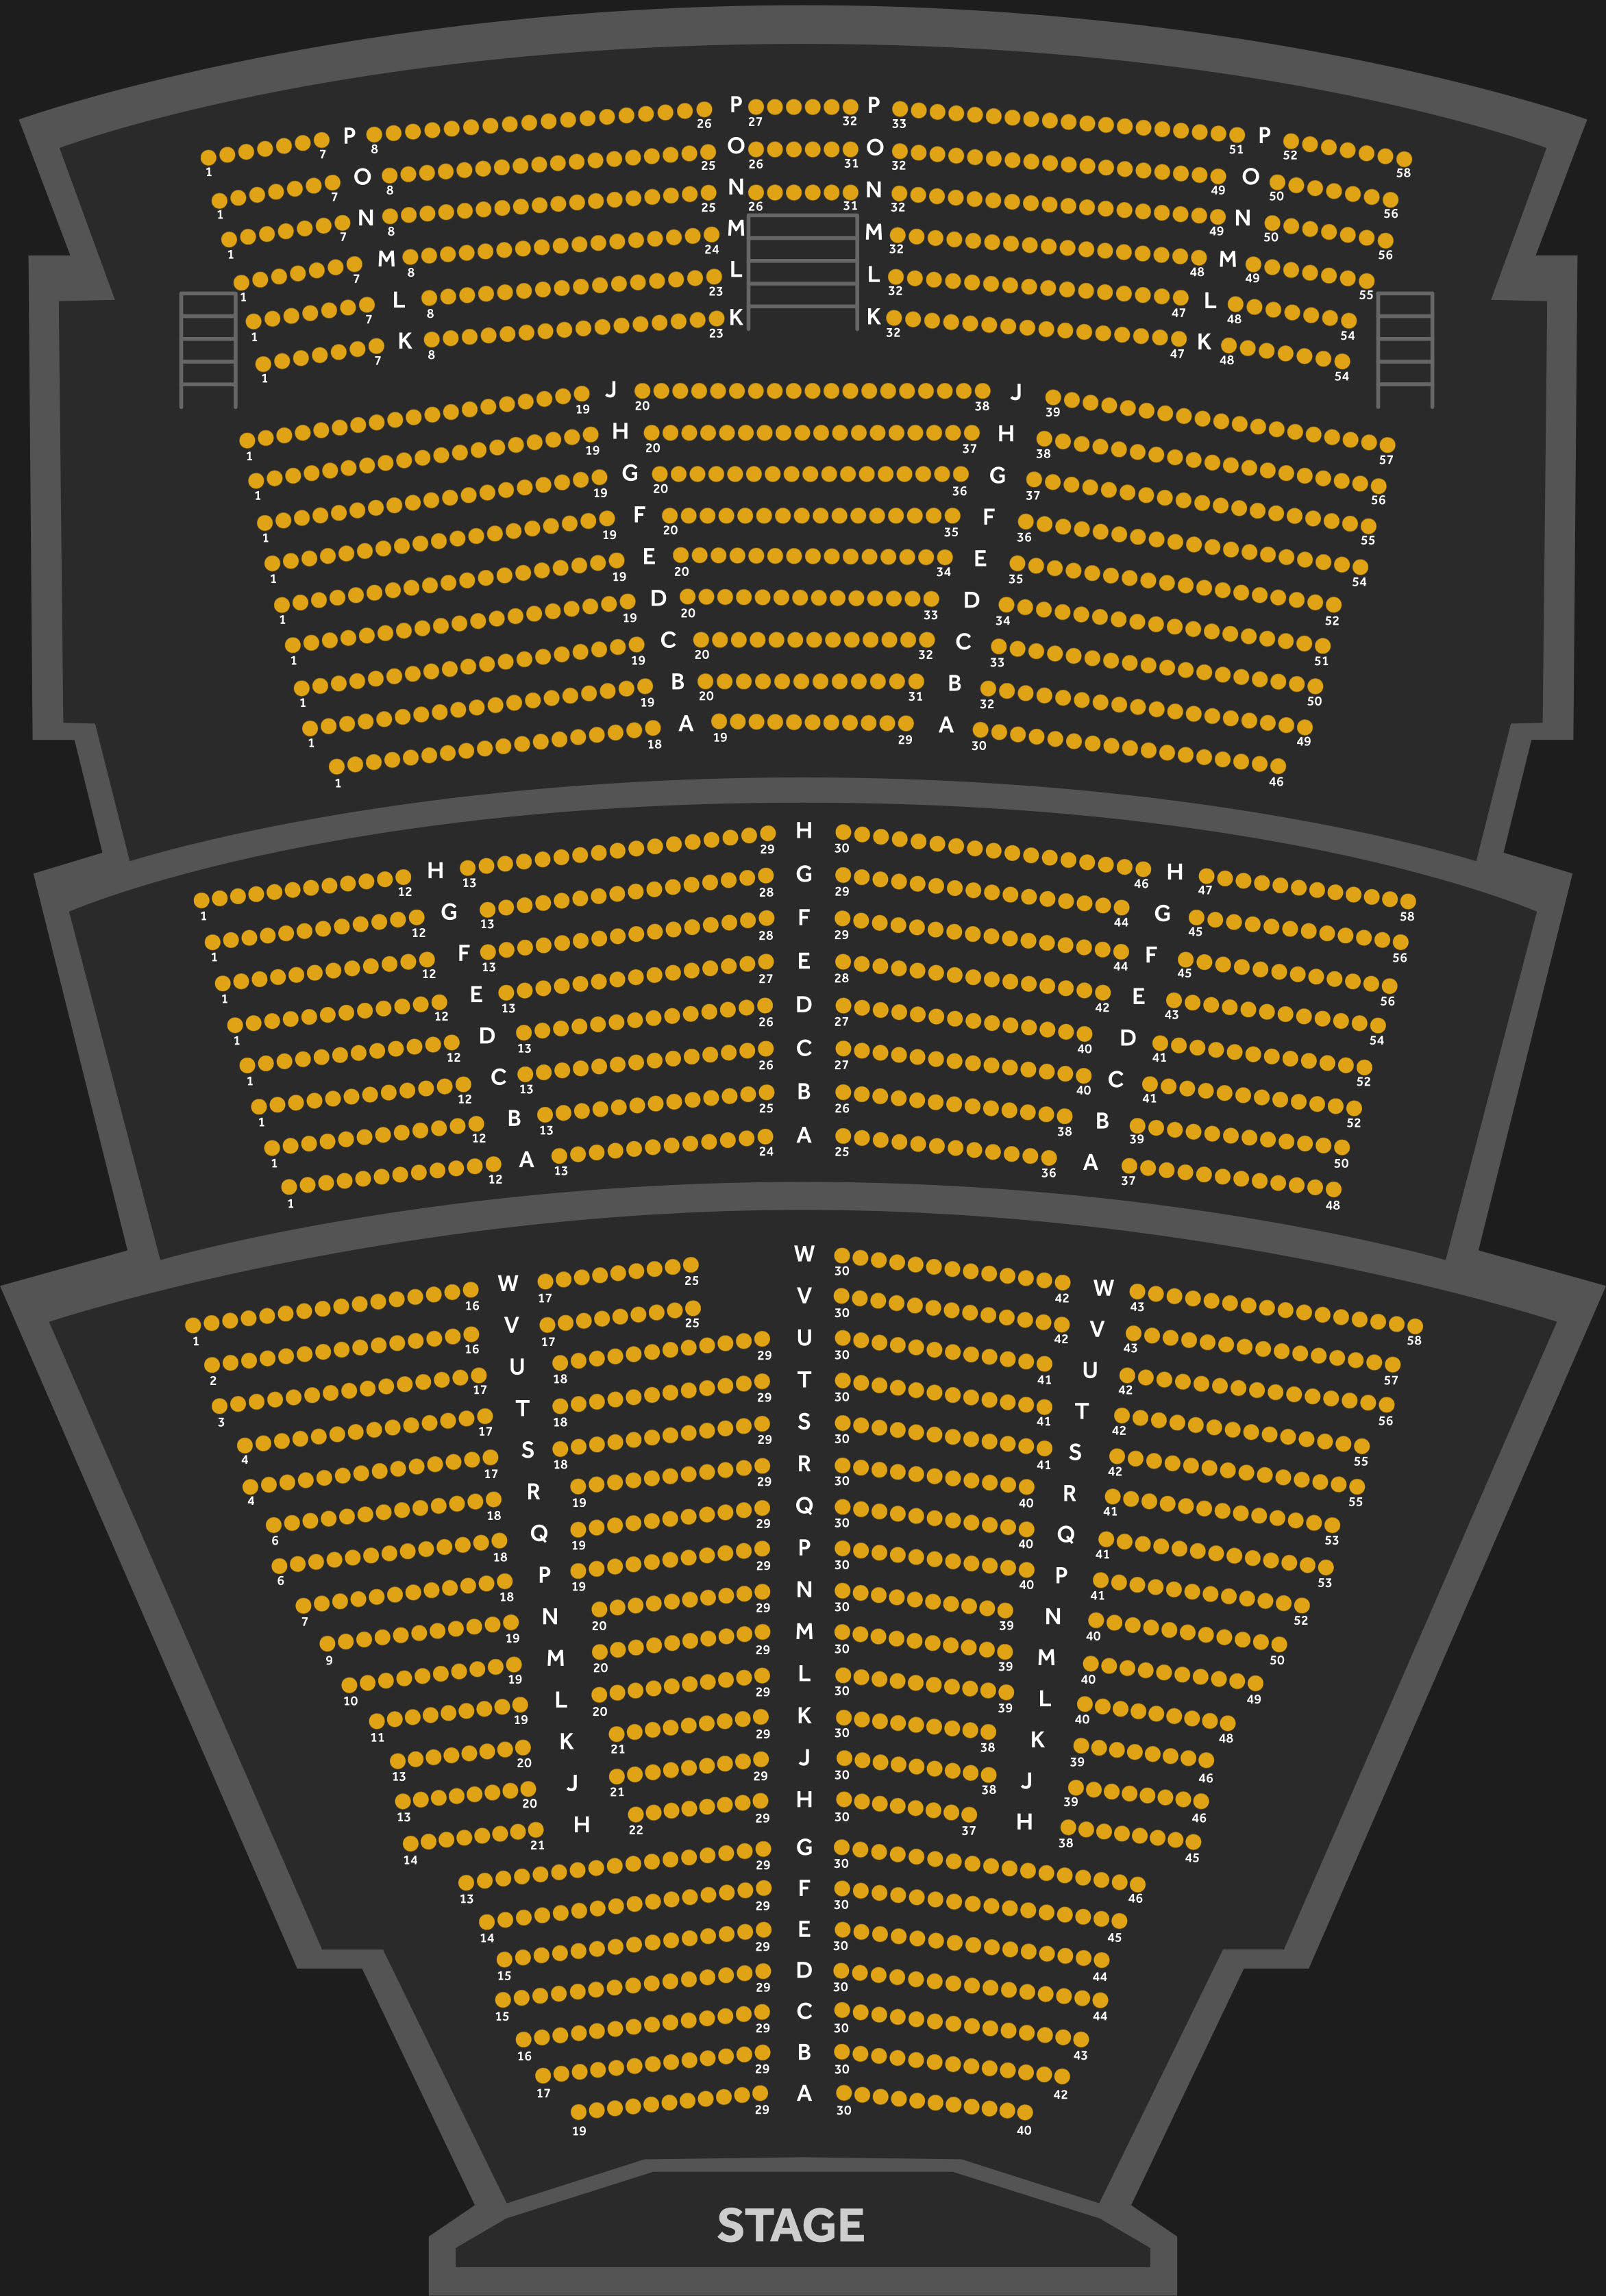 Athenaeum theatre seating chart